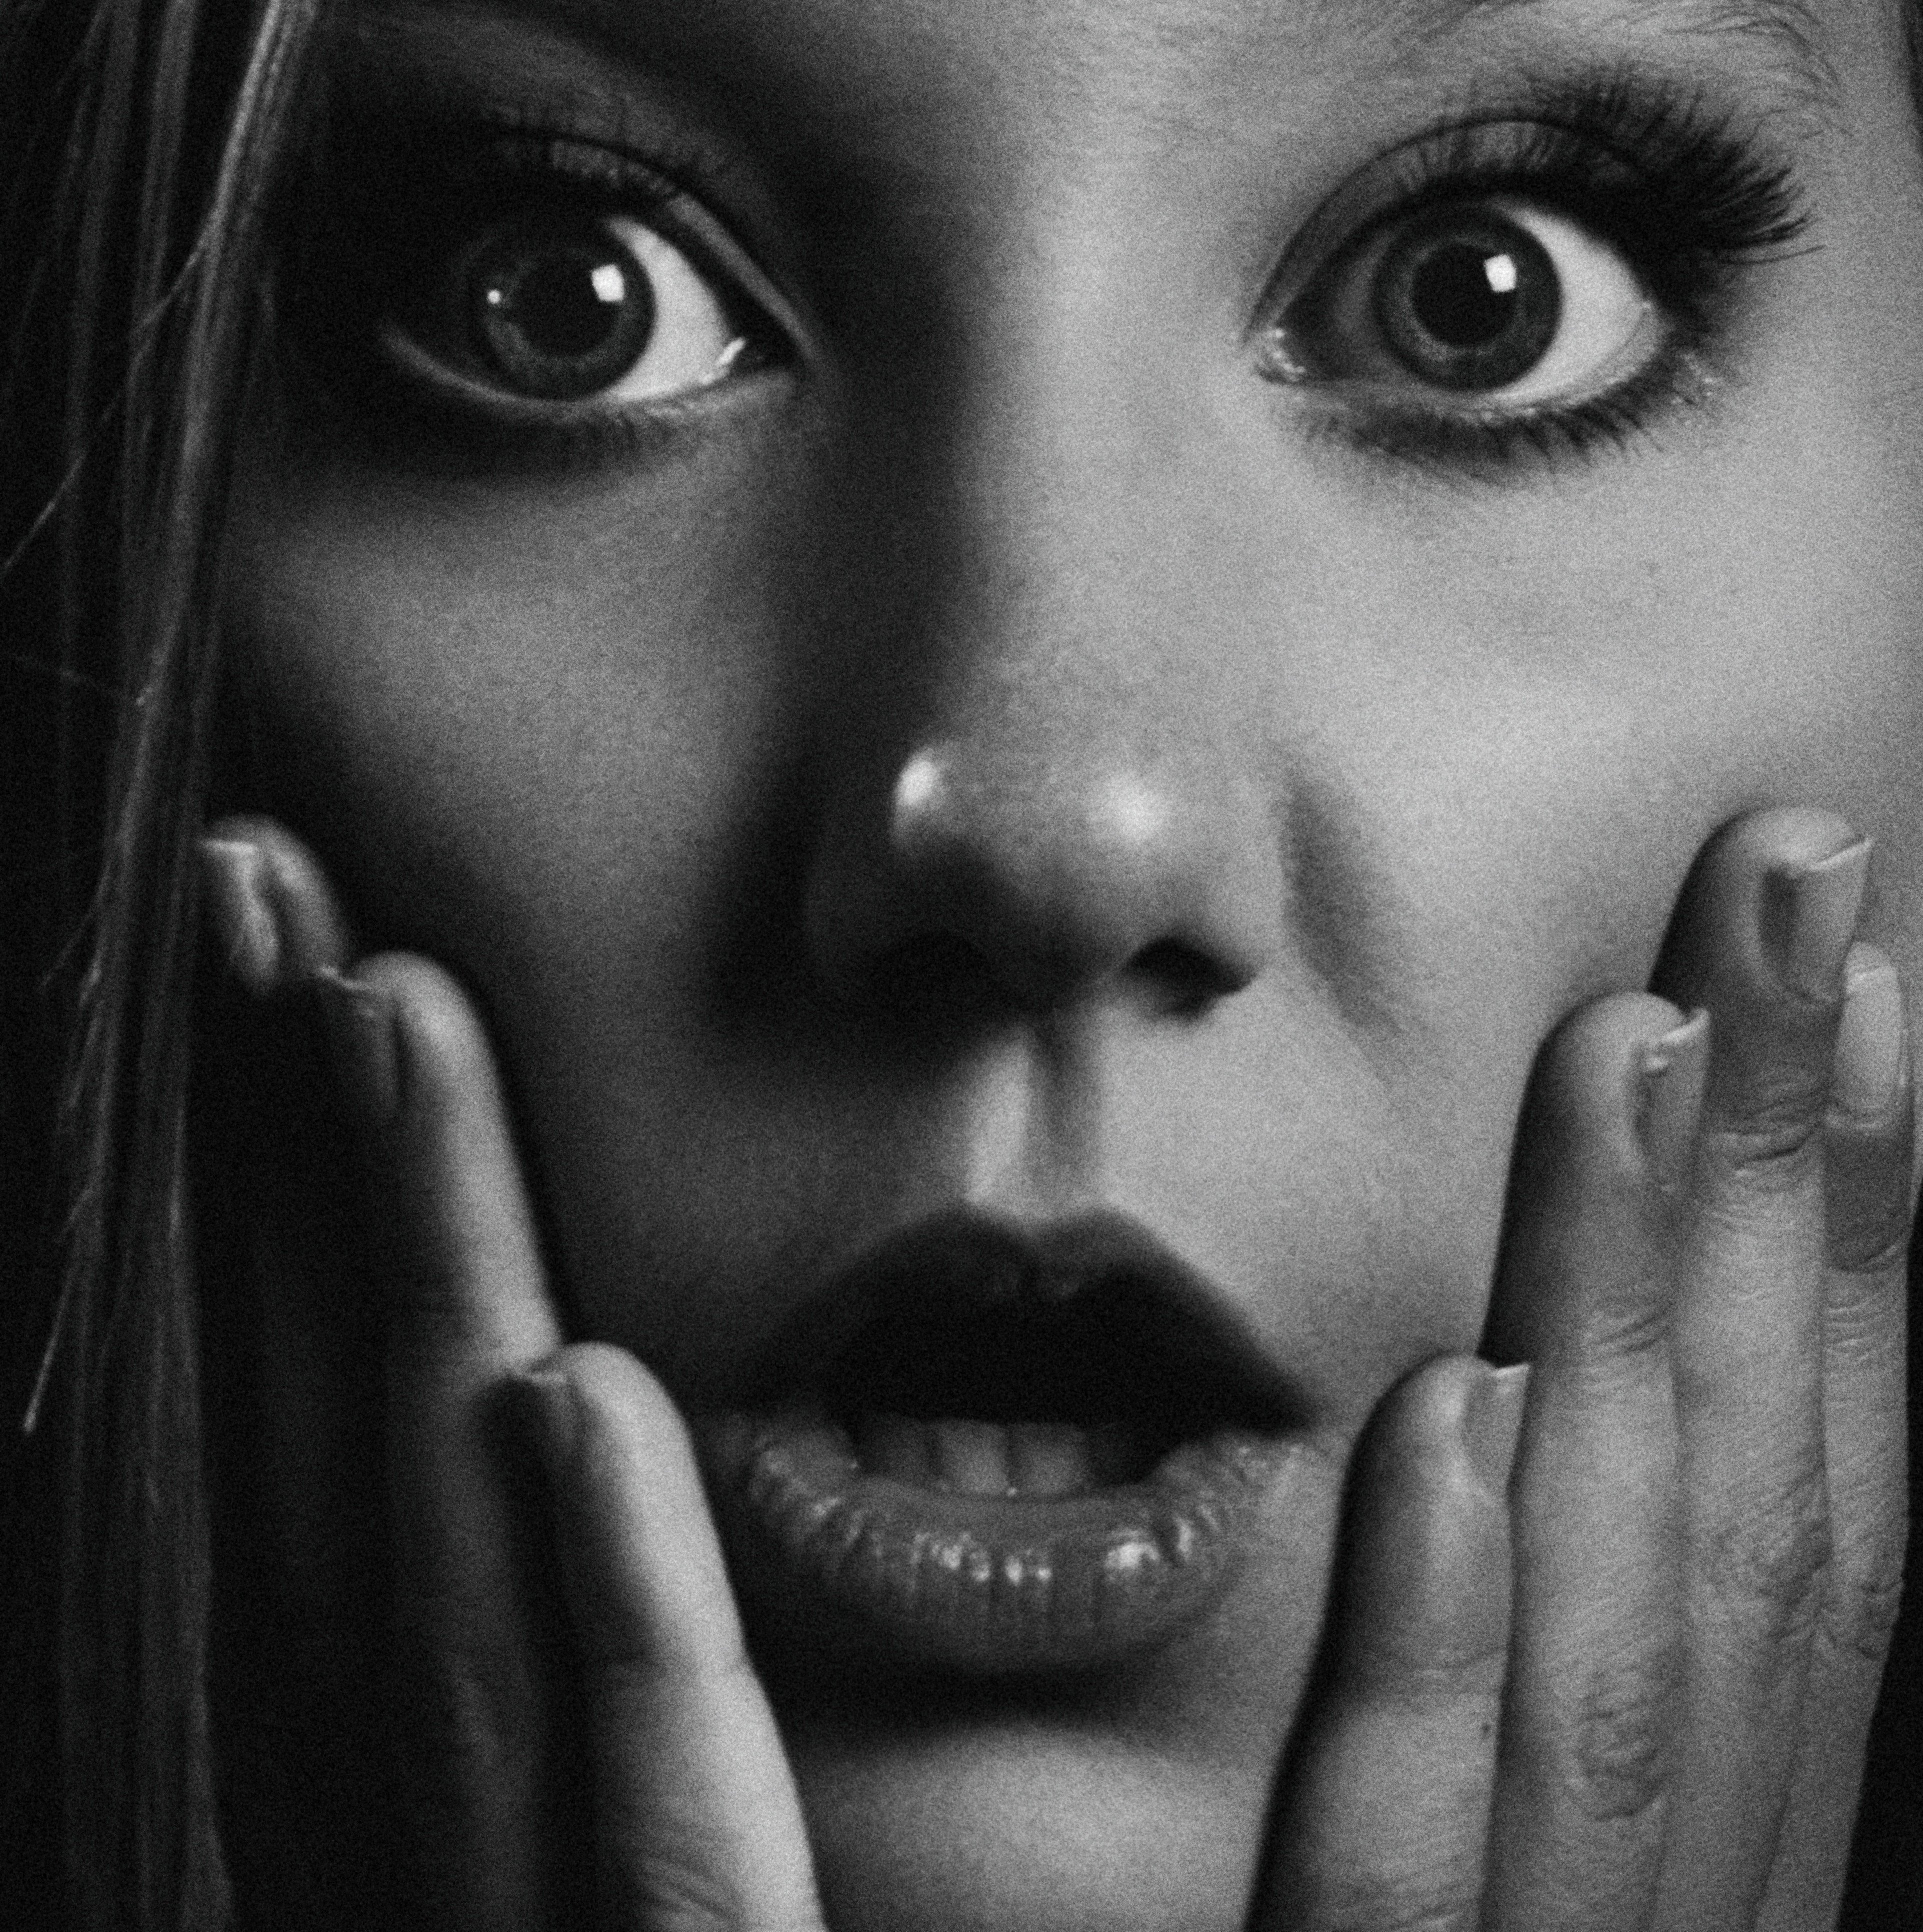 Une femme choquée. | Source : Pexels/Alexander Krivitskiy